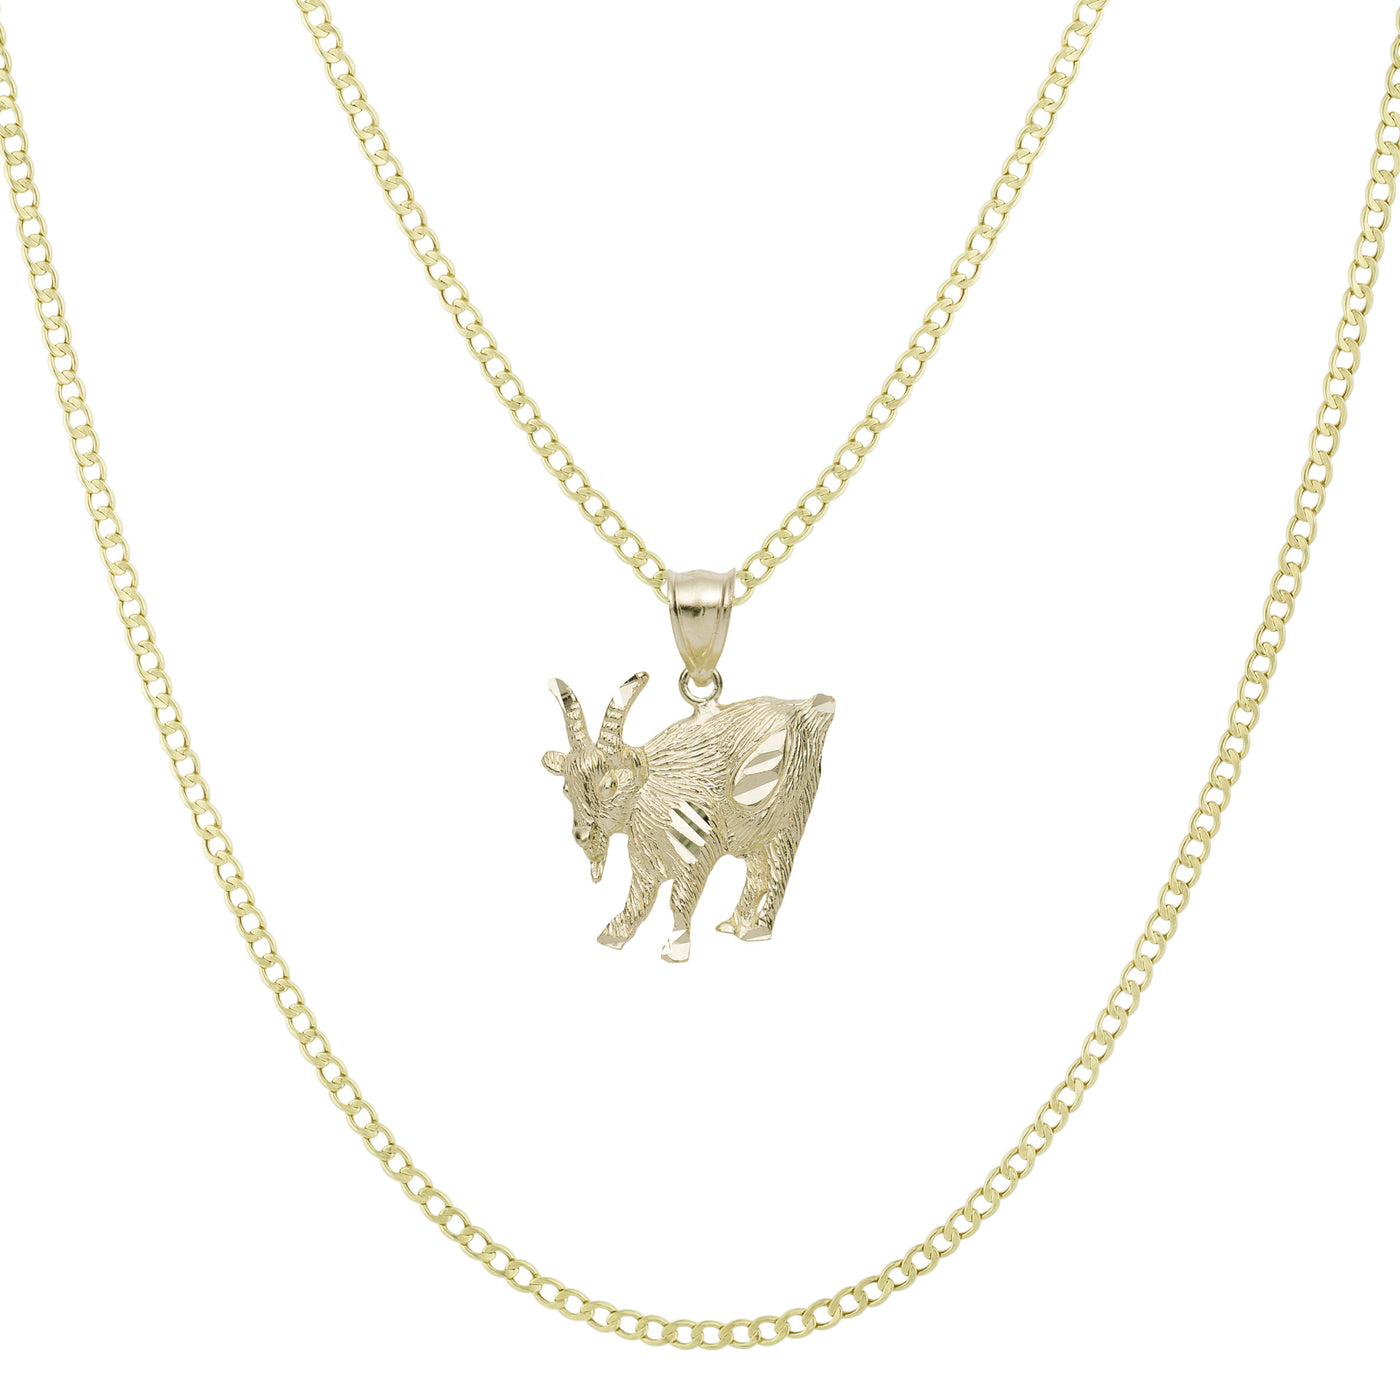 1 1/4" Diamond Cut Goat Pendant & Chain Necklace Set 10K Yellow Gold